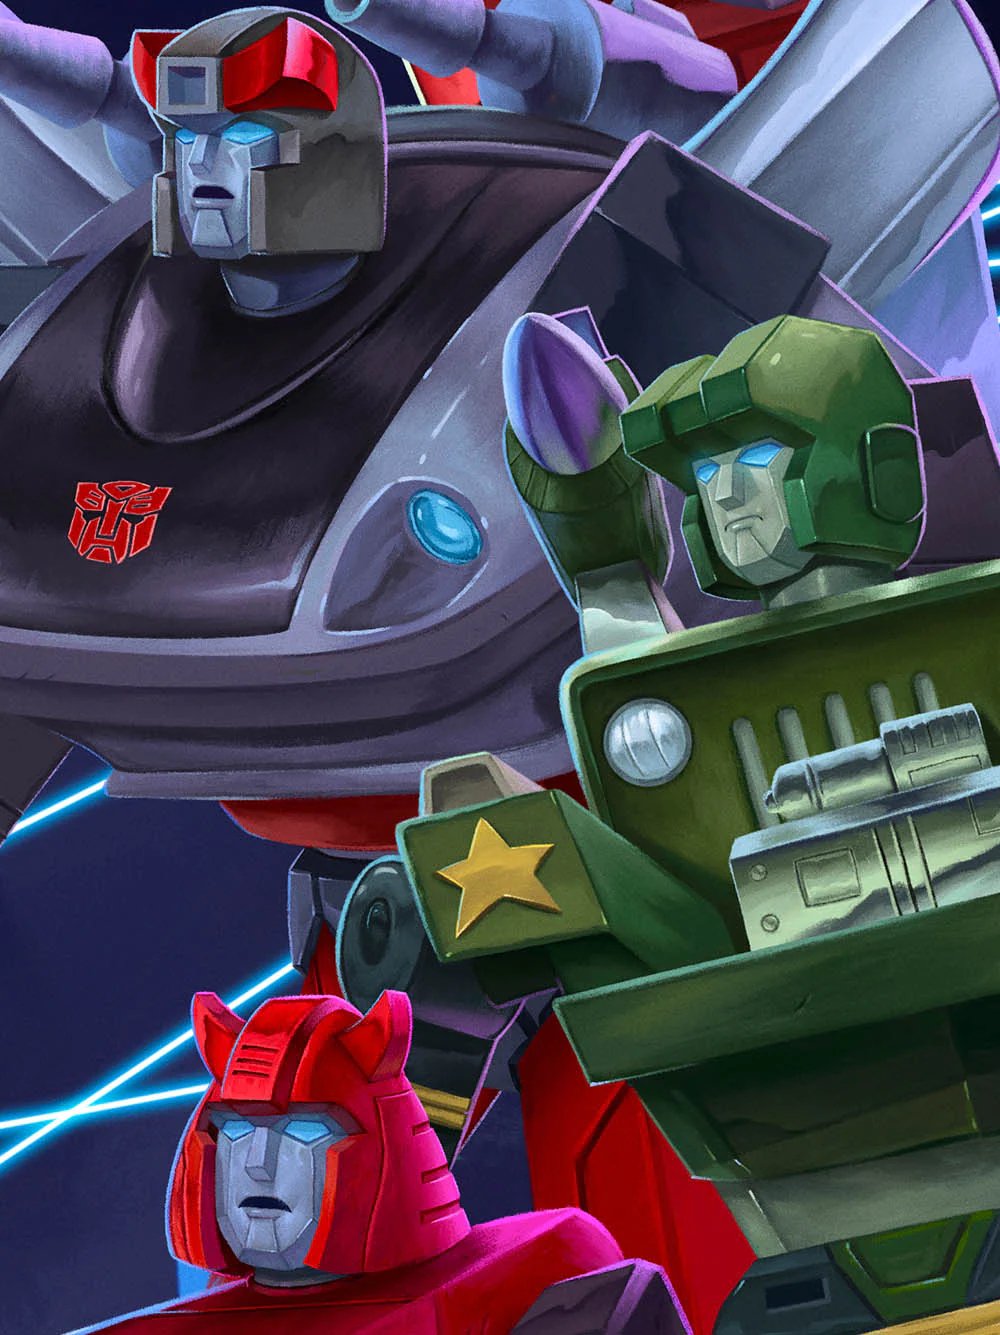 Transformers 'Autobots' Poster - Cartoon Variant - 18" x 24"